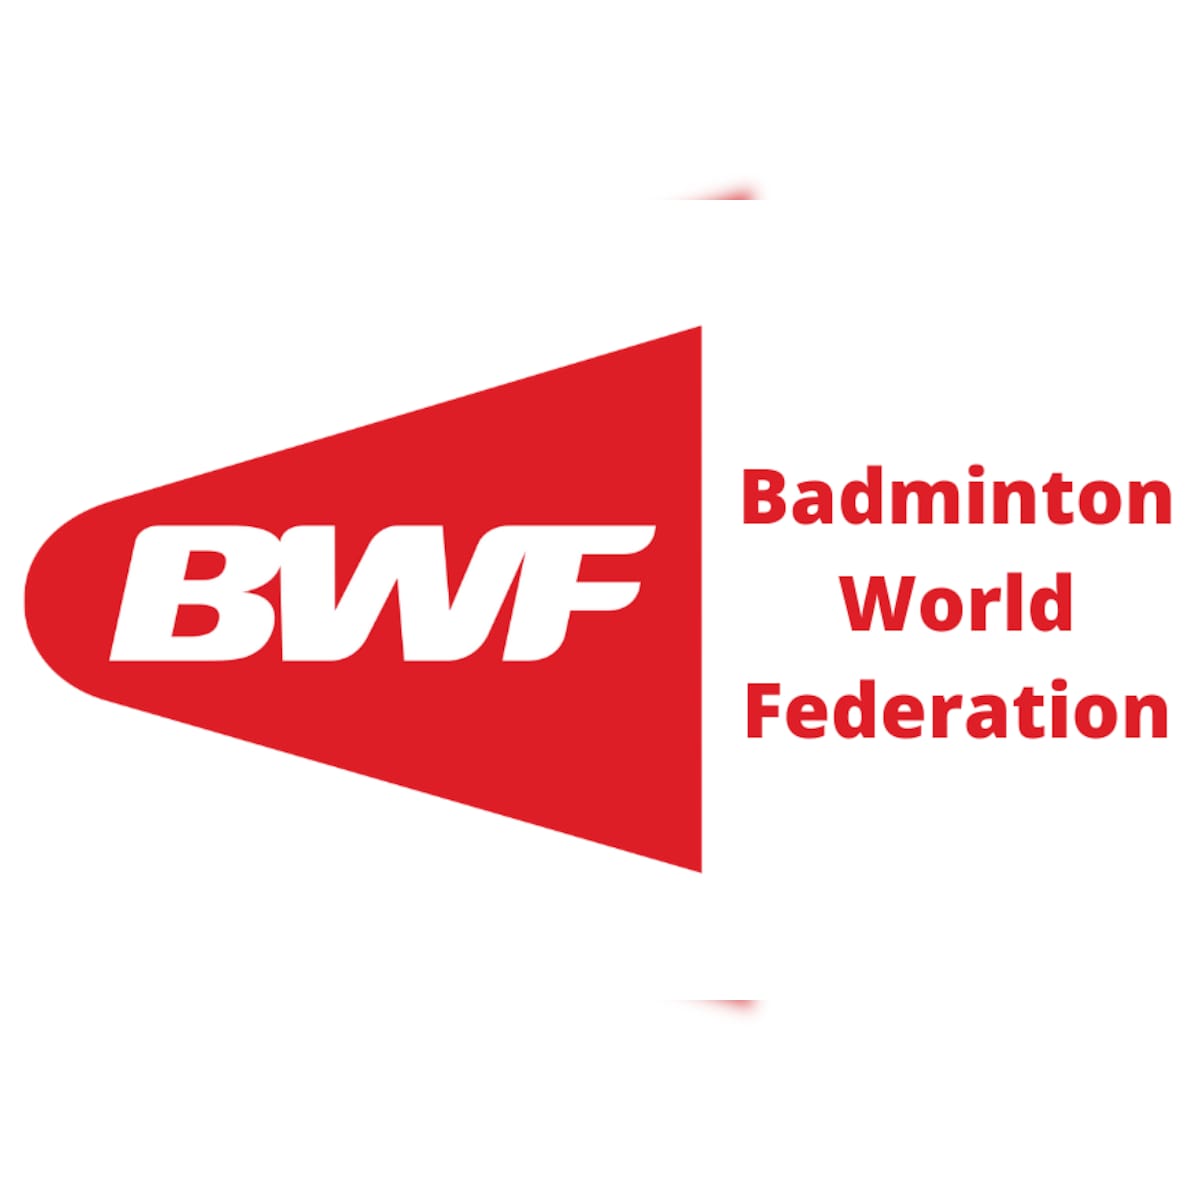 Olympic 2020 badminton qualification ranking